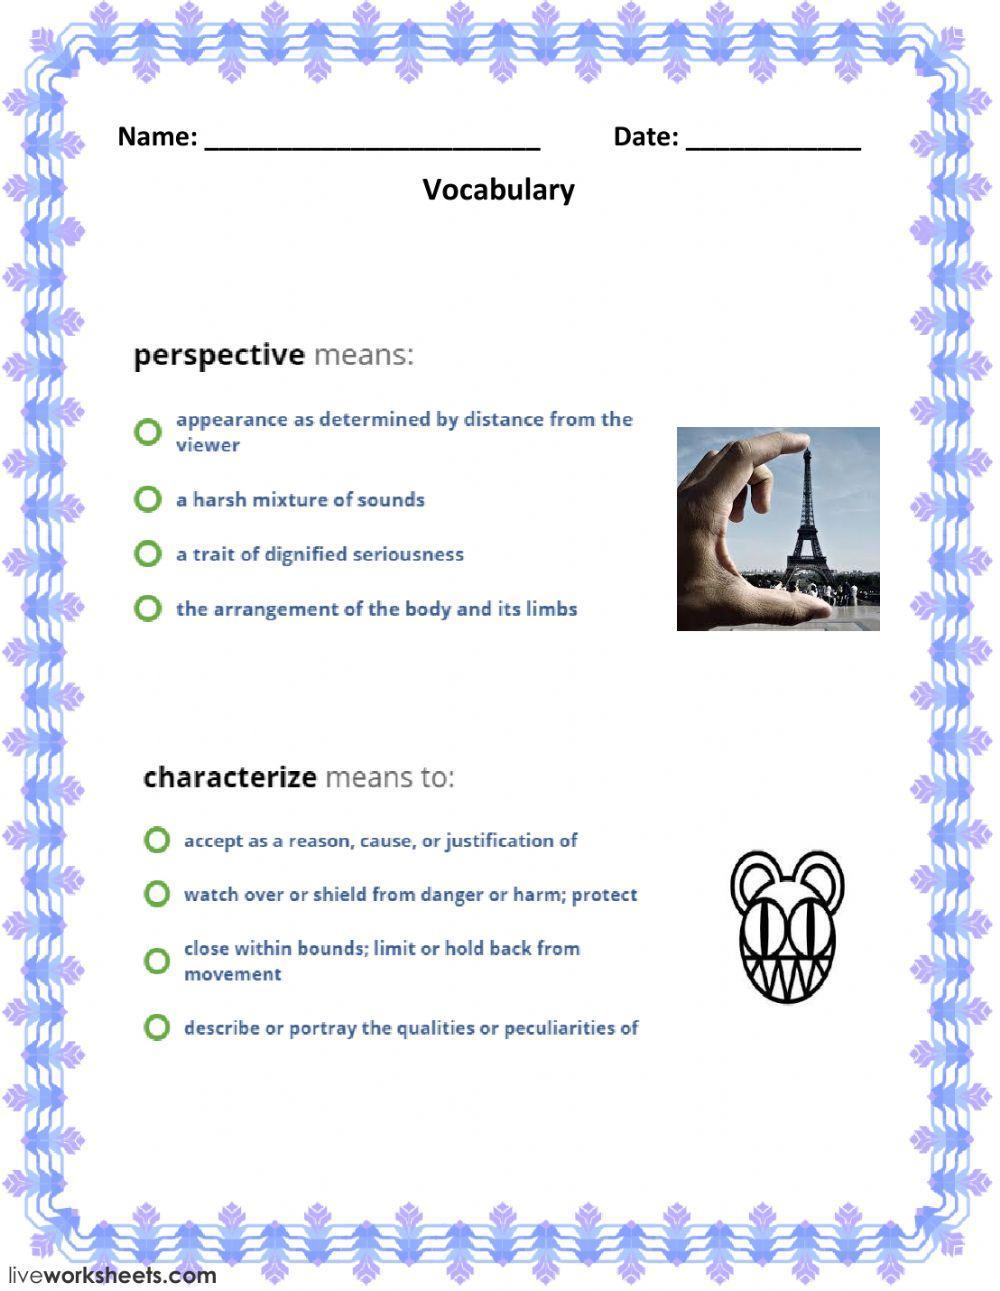 Vocabulary-1